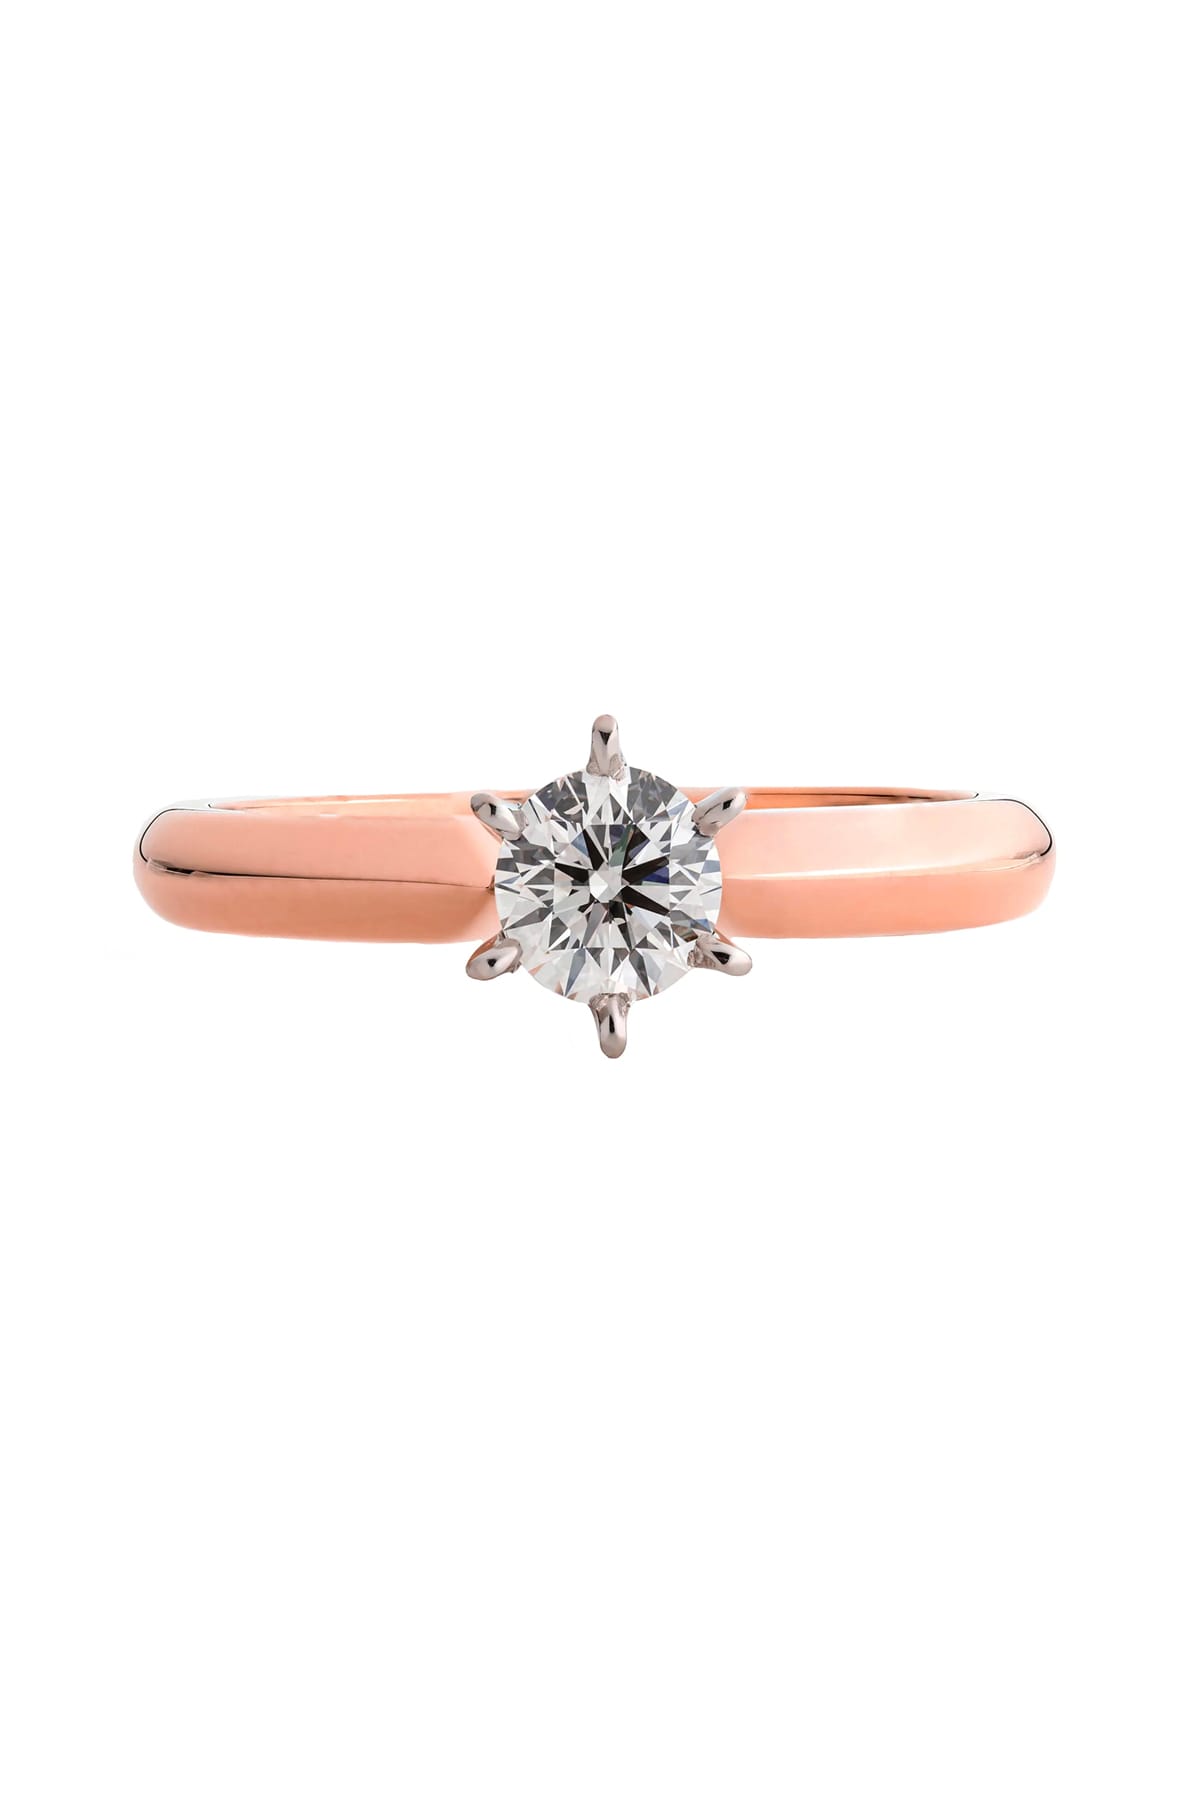 LeGassick 0.70 Carat Diamond Solitaire Engagement Ring available at LeGassick Diamonds and Jewellery Gold Coast, Australia.